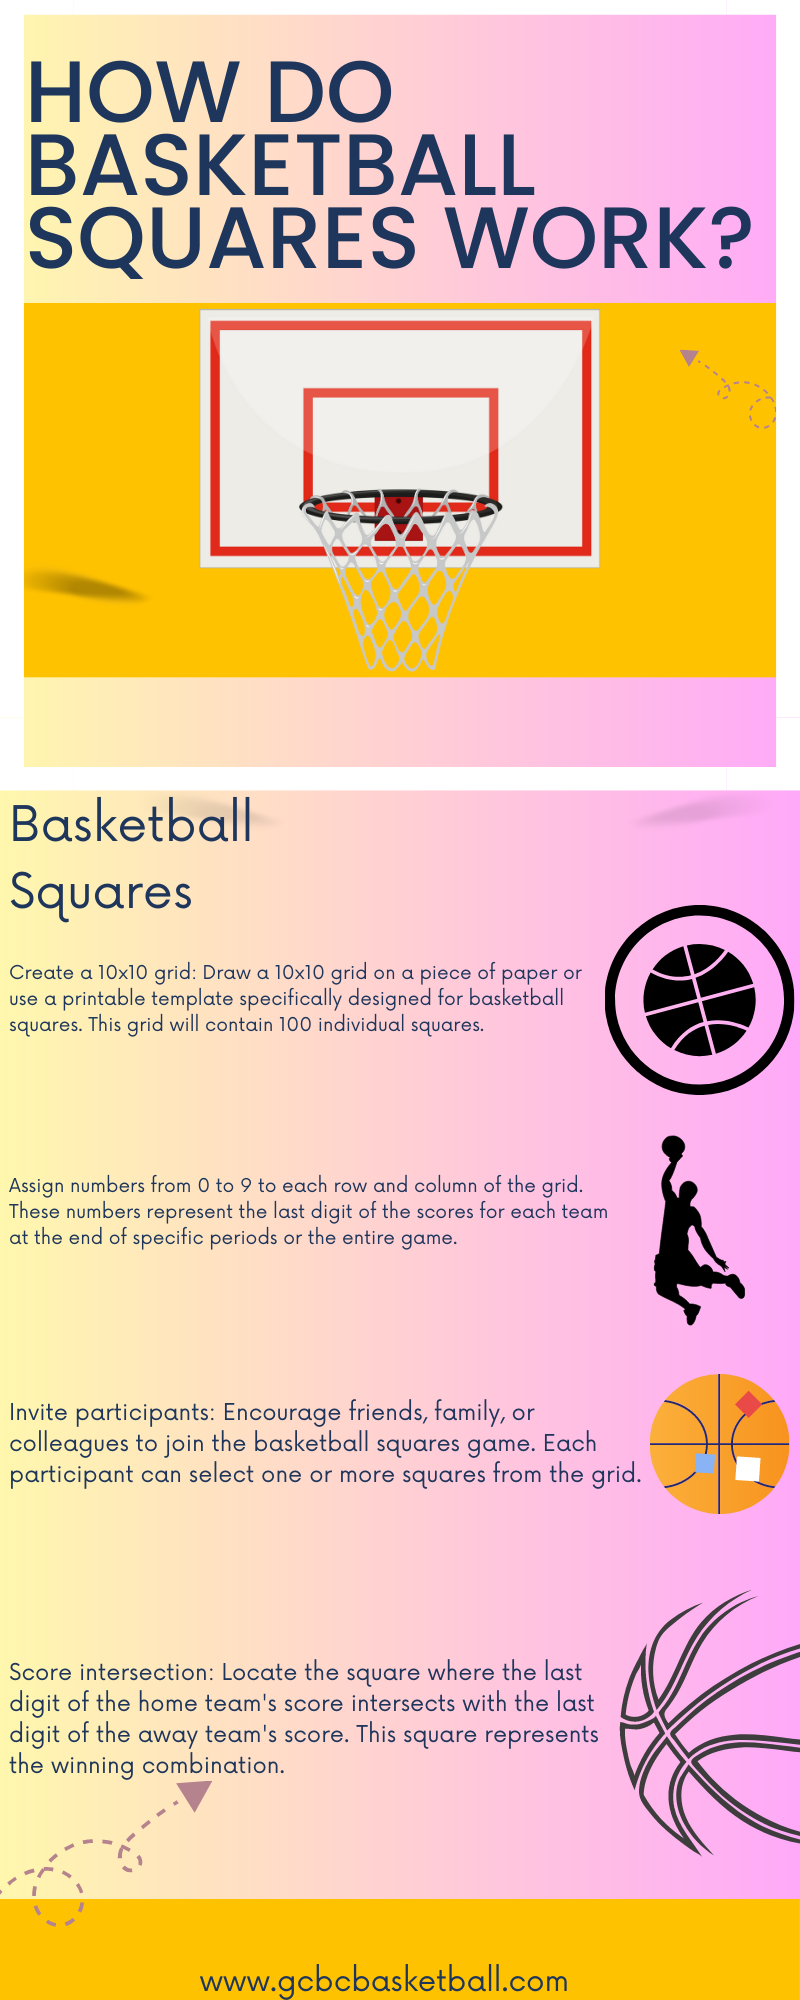 How Do Basketball Squares Work infographics 1